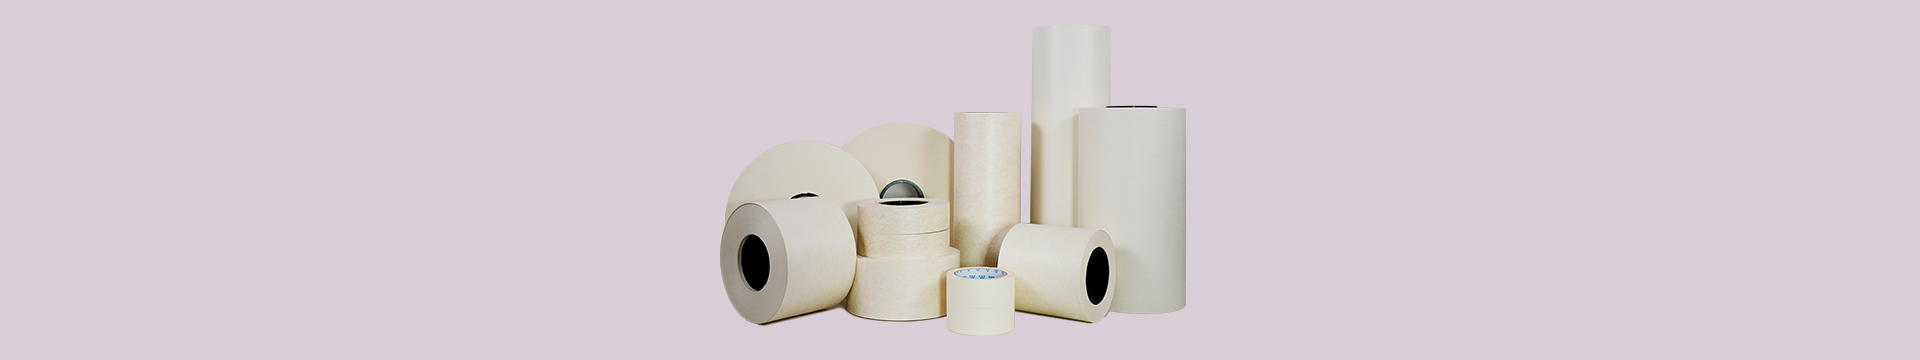 High-strength hybrid aramid fiber paper, Durable hybrid aramid paper, Fire-resistant hybrid aramid paper, Customized hybrid aramid paper